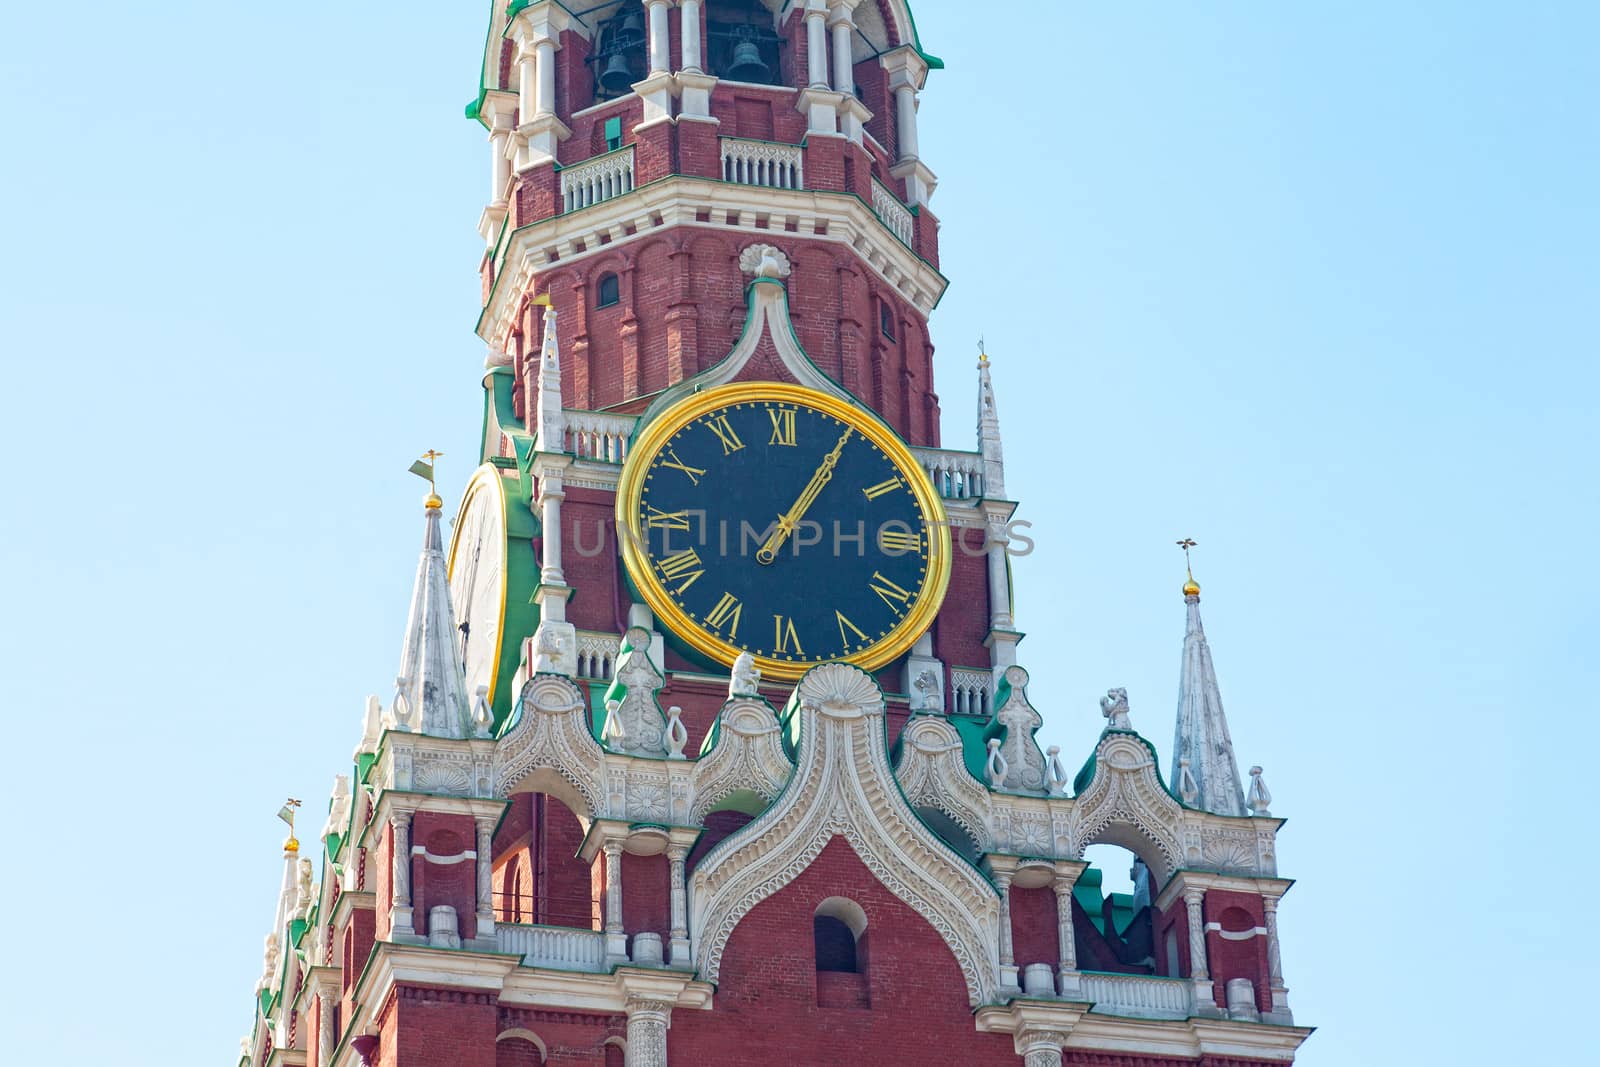 Chiming clock on the Spassky tower in the Moscow Kremlin, by elena_shchipkova